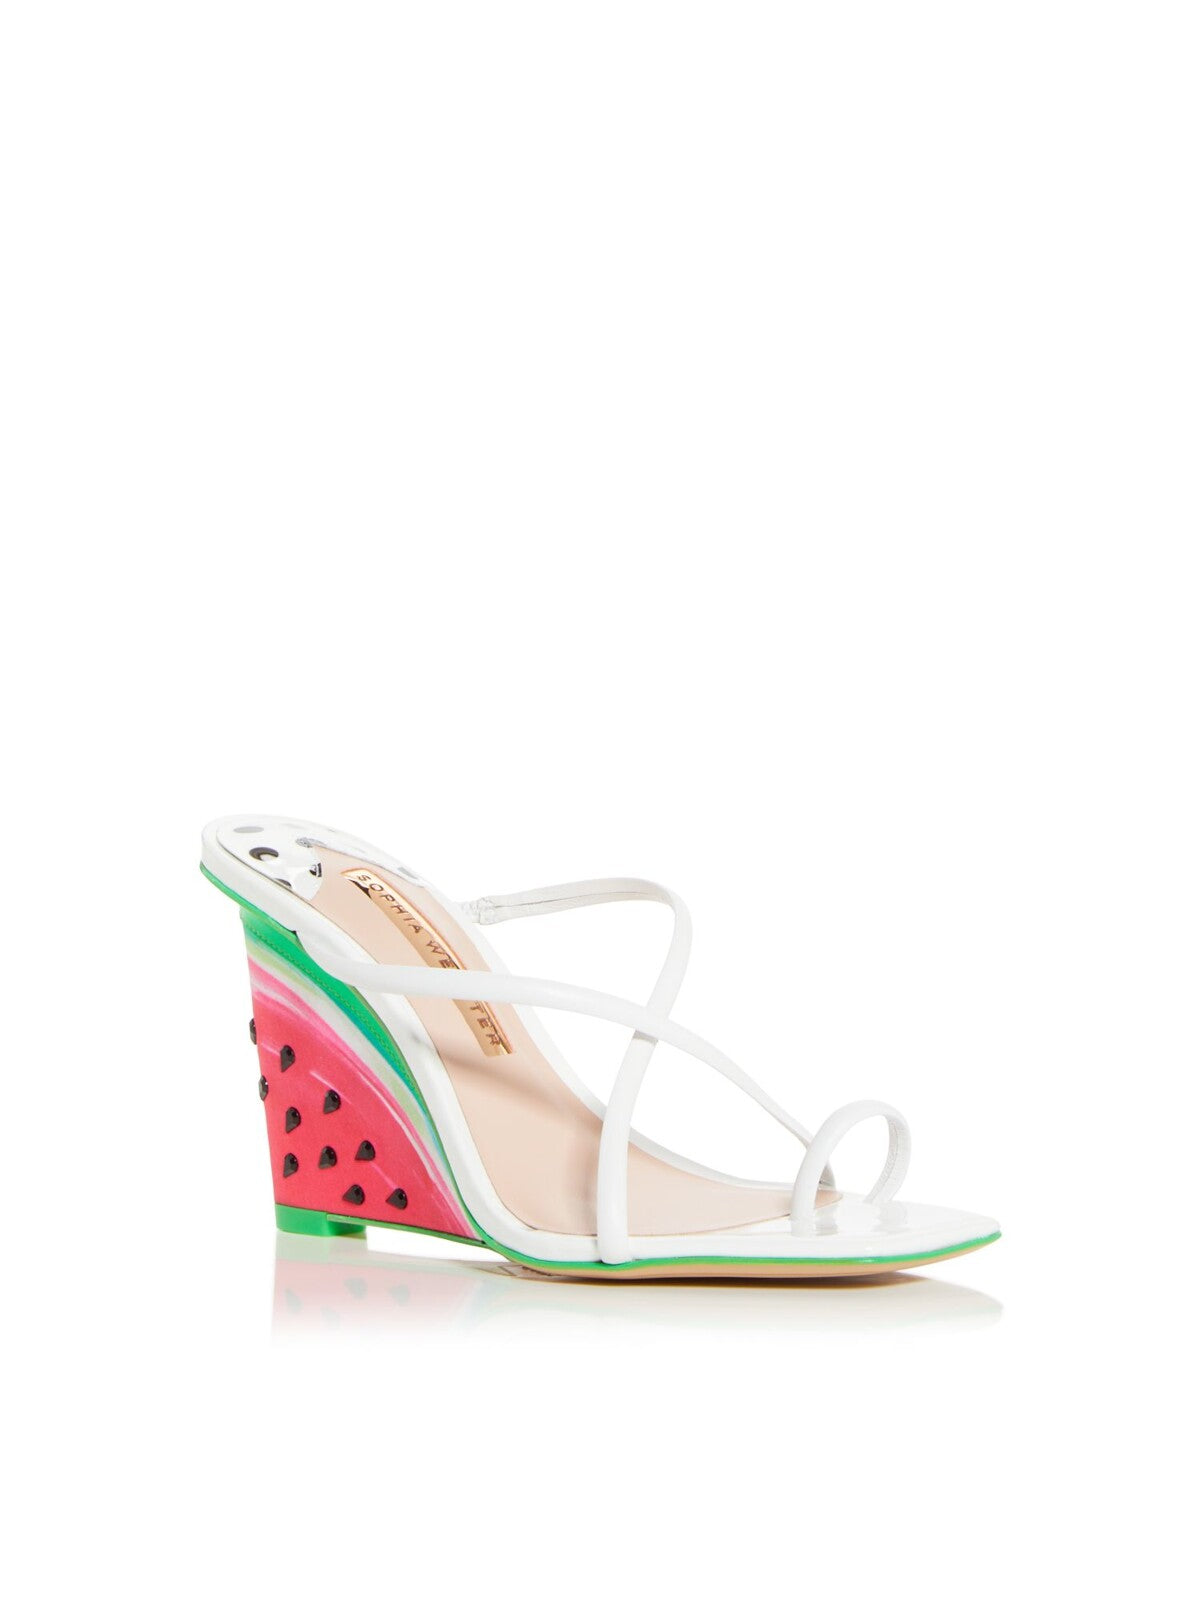 SOPHIA WEBSTER Womens White Watermelon Embellished Brooke Square Toe Wedge Slip On Leather Heeled Sandal 41